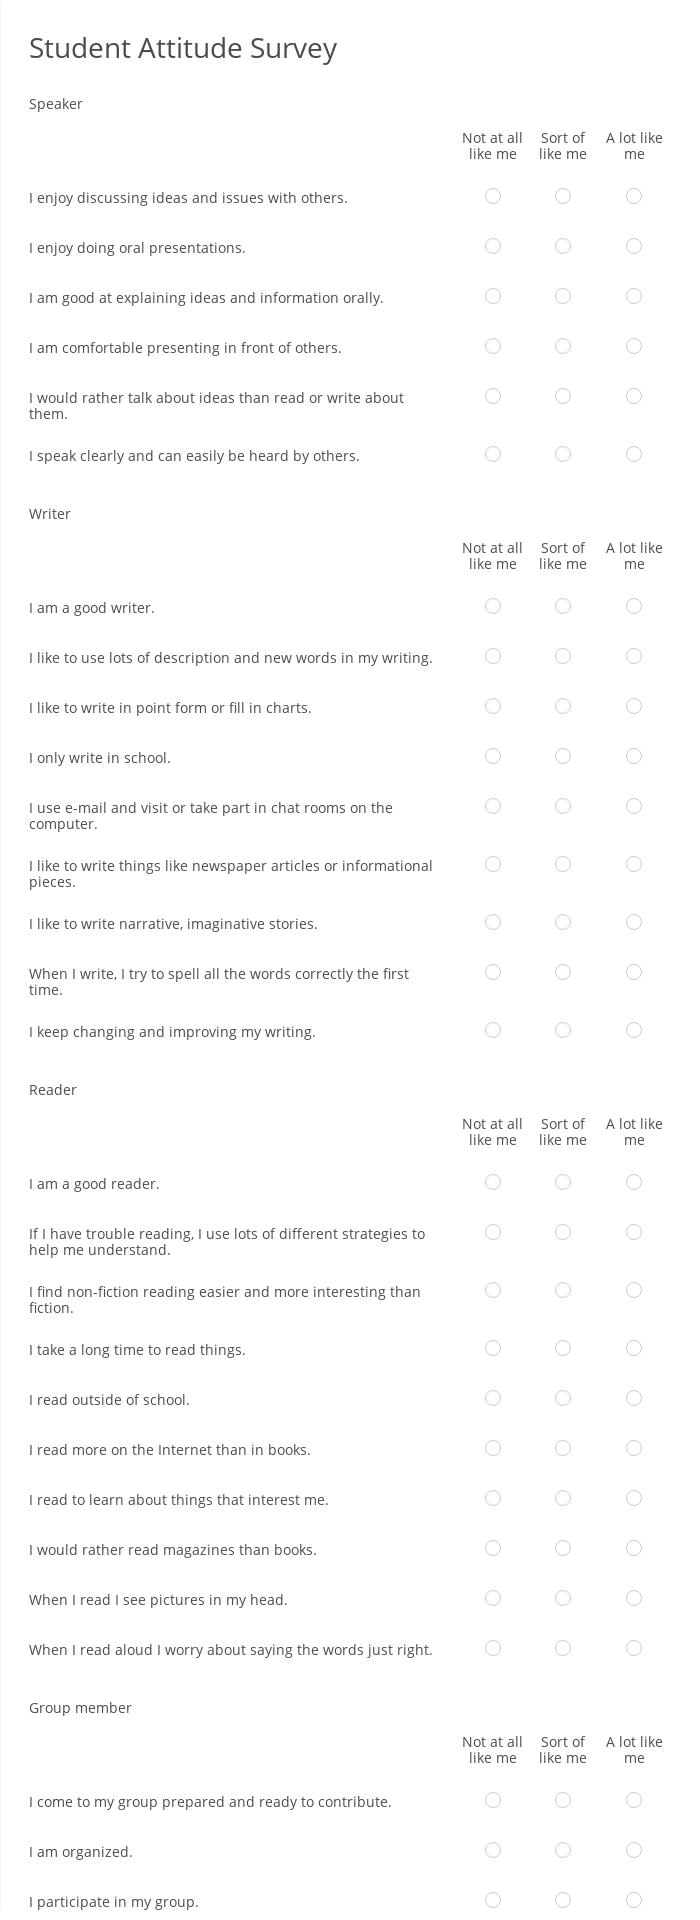 Student Attitude Survey